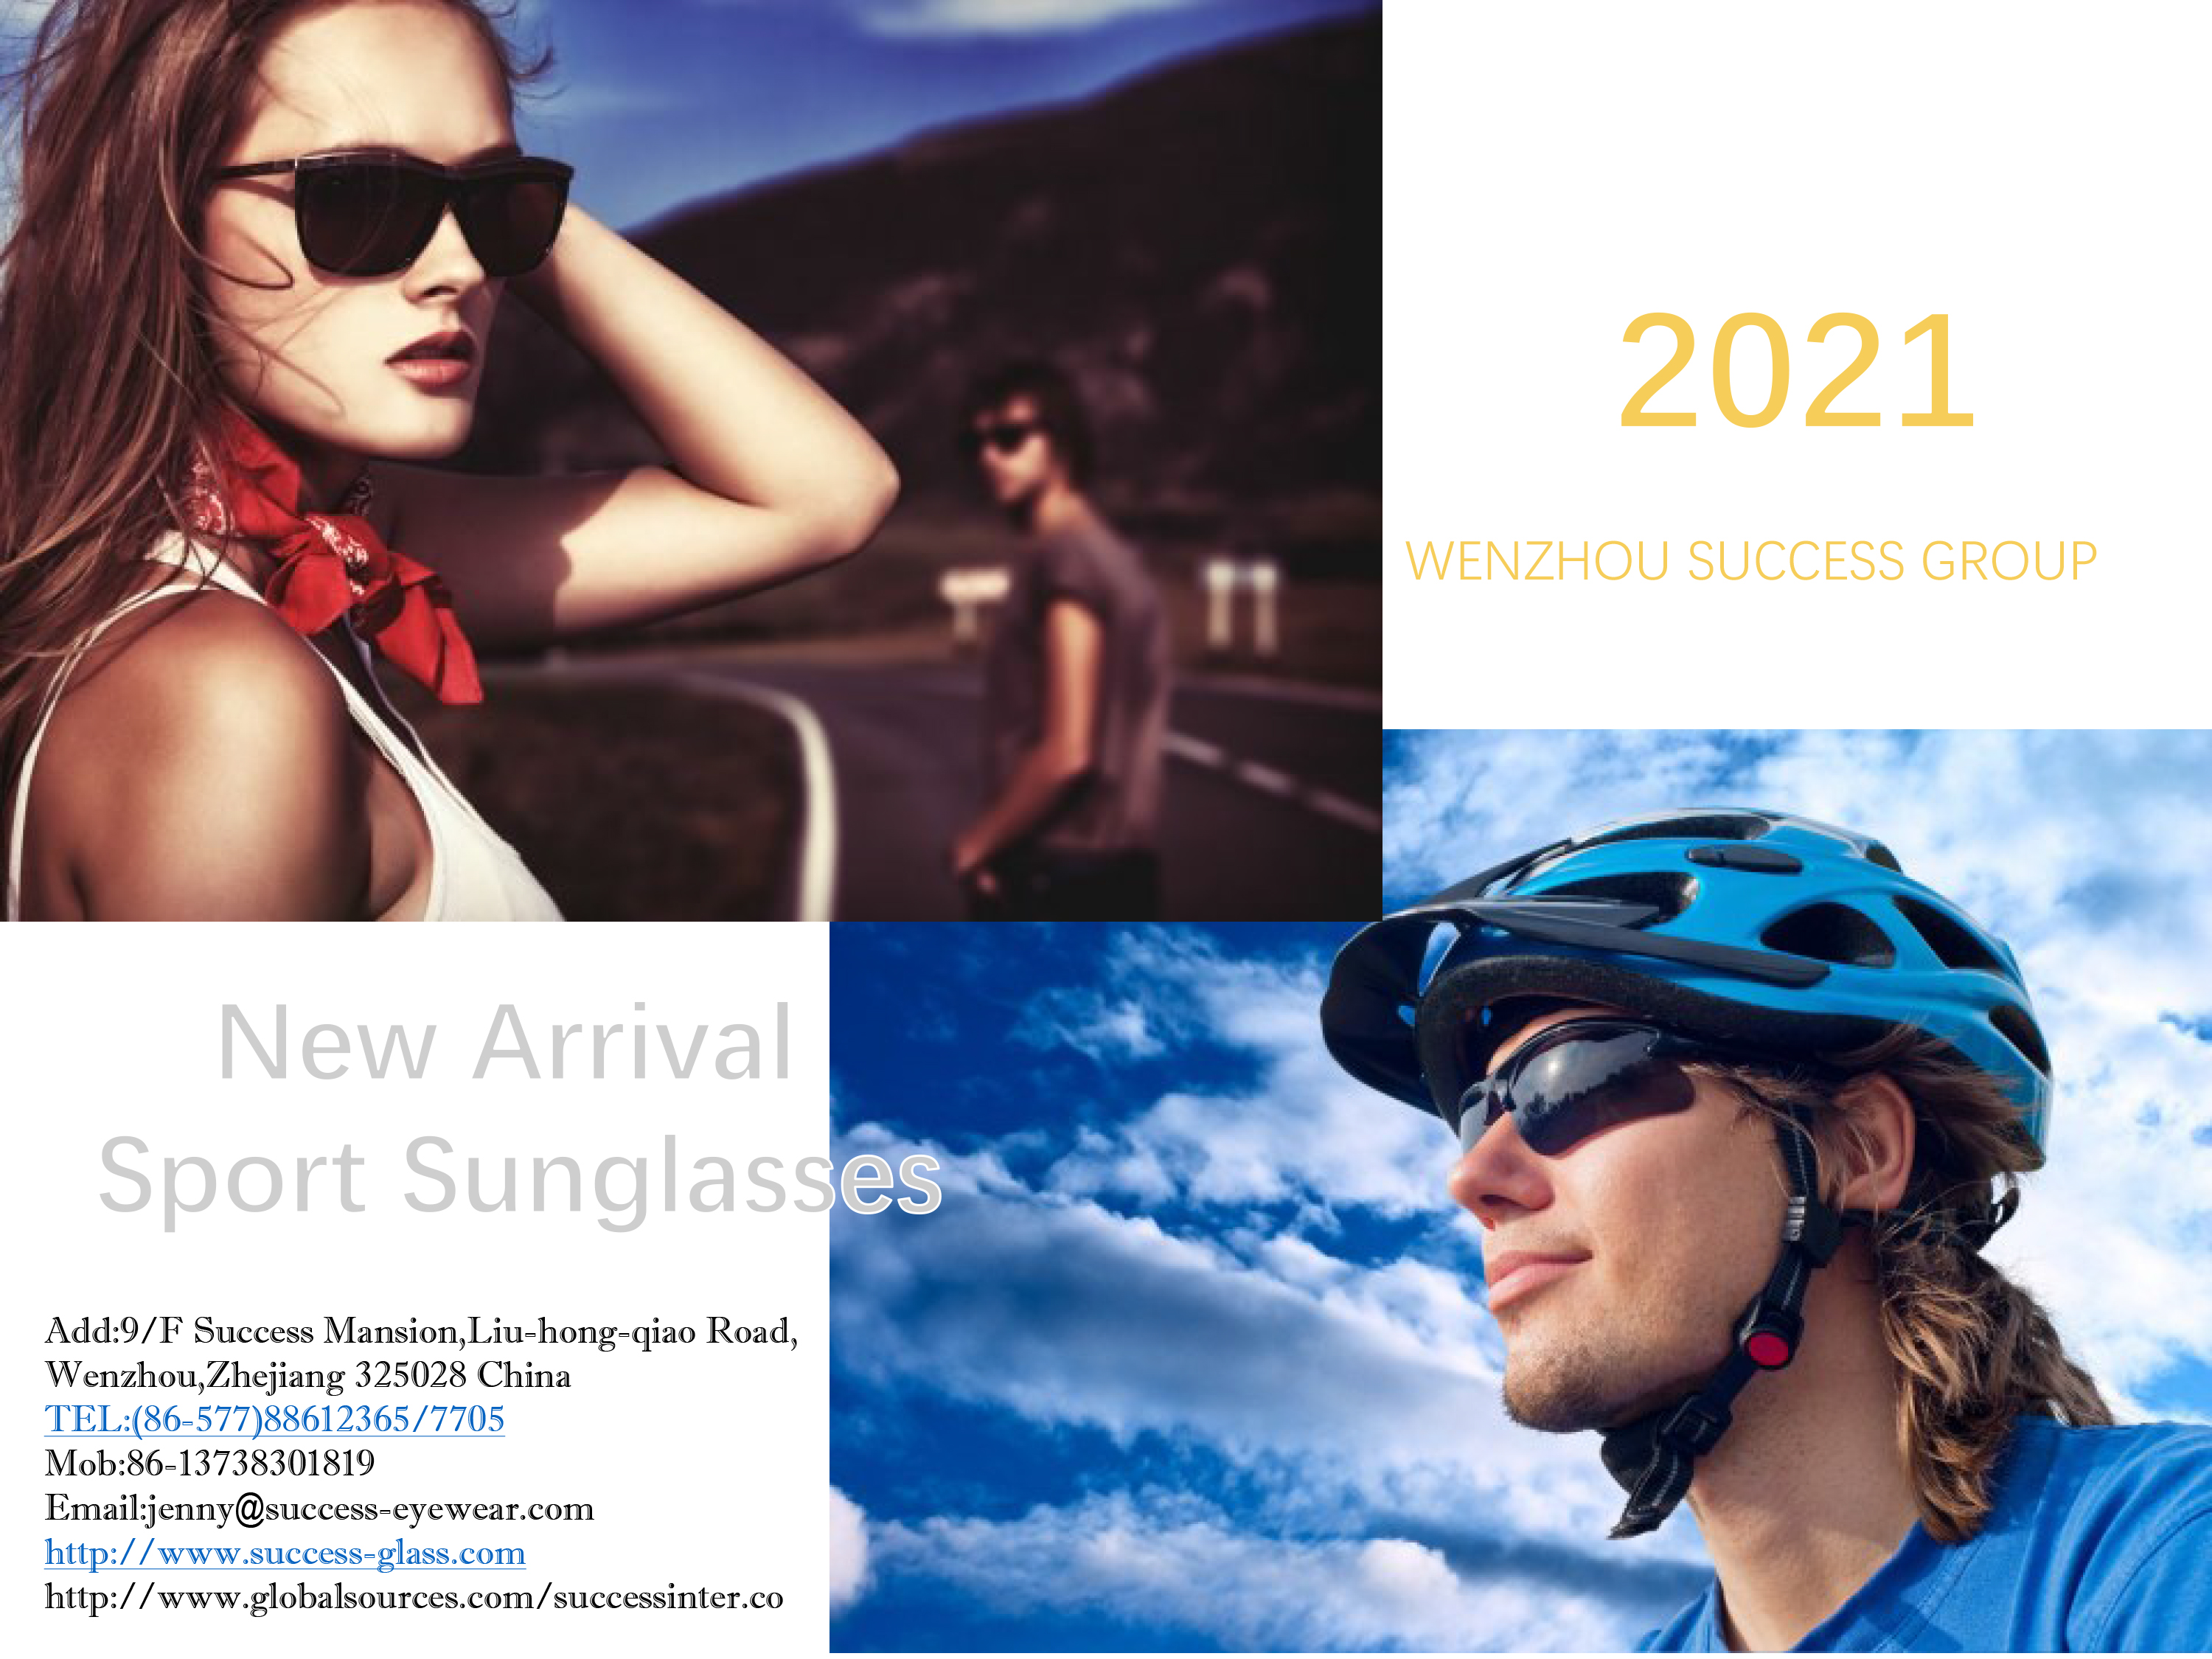 2021 new sport sunglasses success group